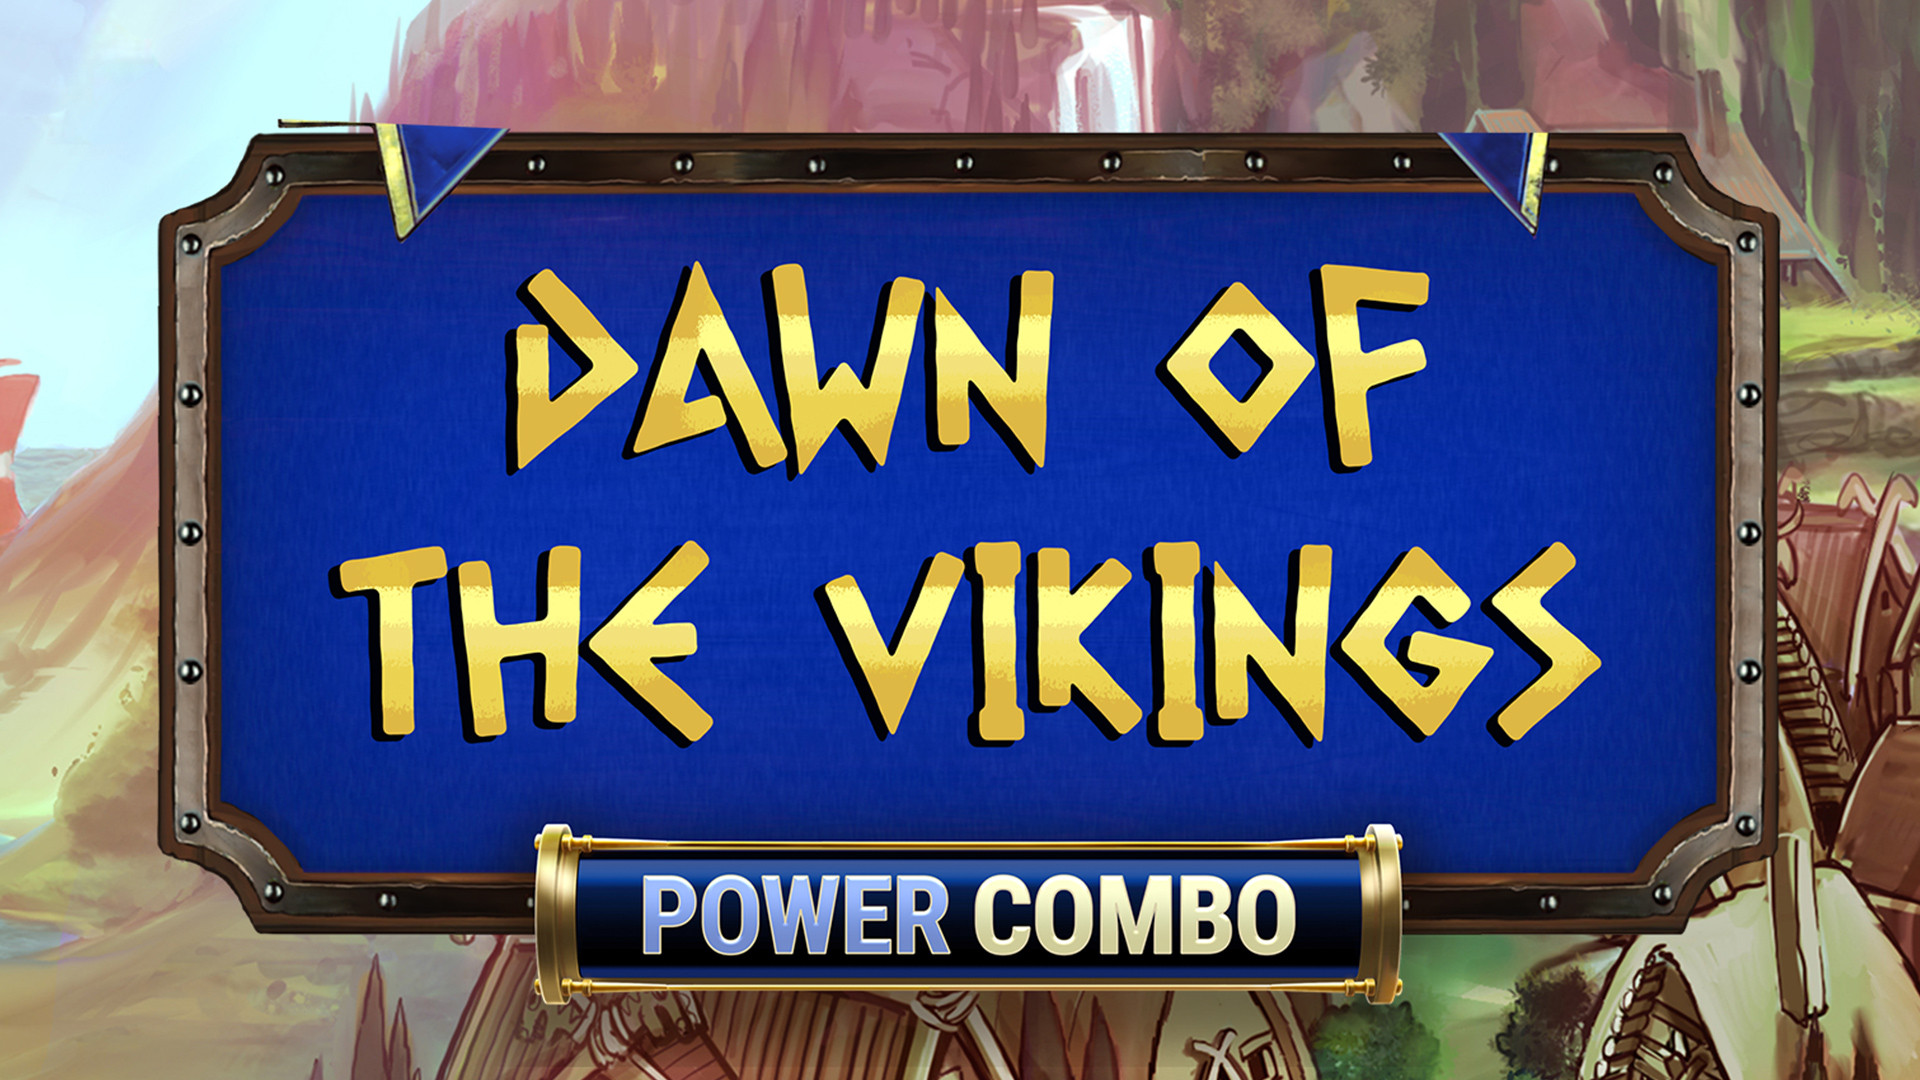 Dawn of the Vikings: POWER COMBO